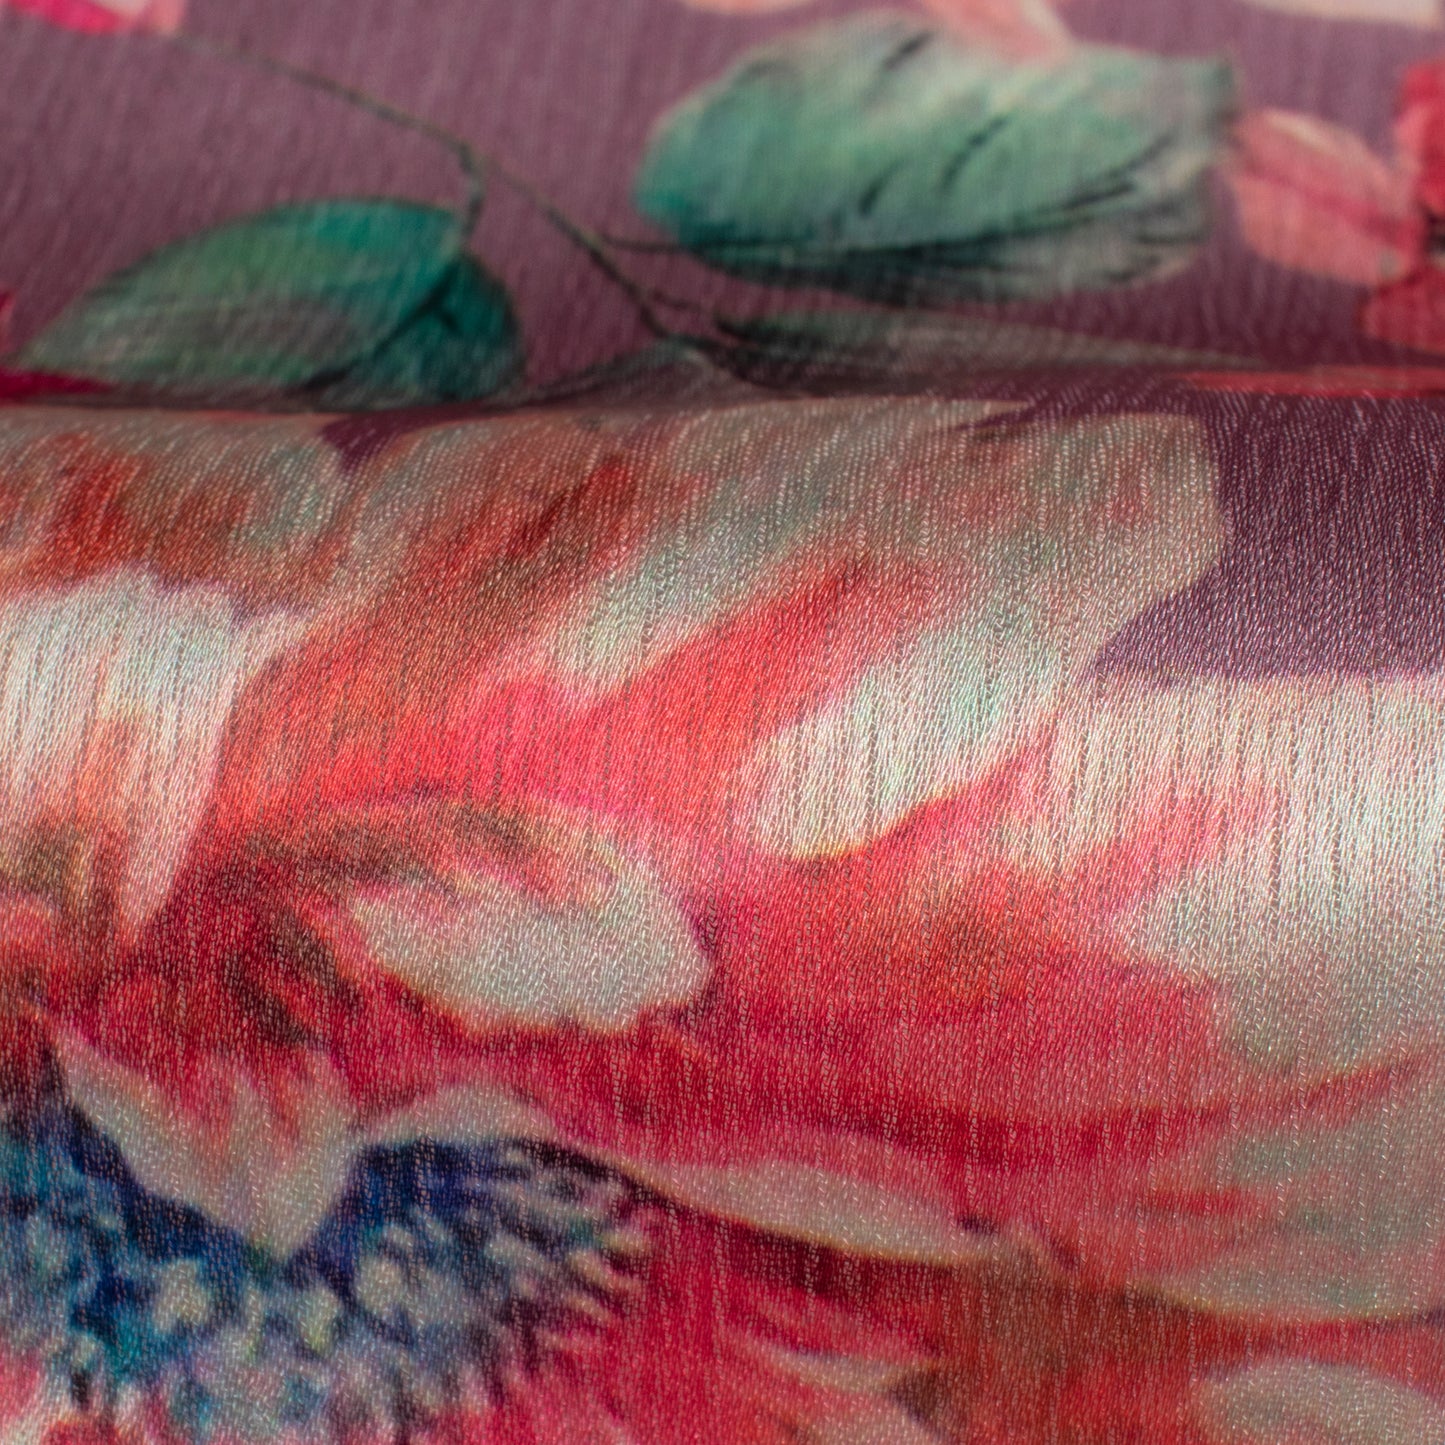 Taffy Pink Floral Digital Print Chiffon Satin Fabric